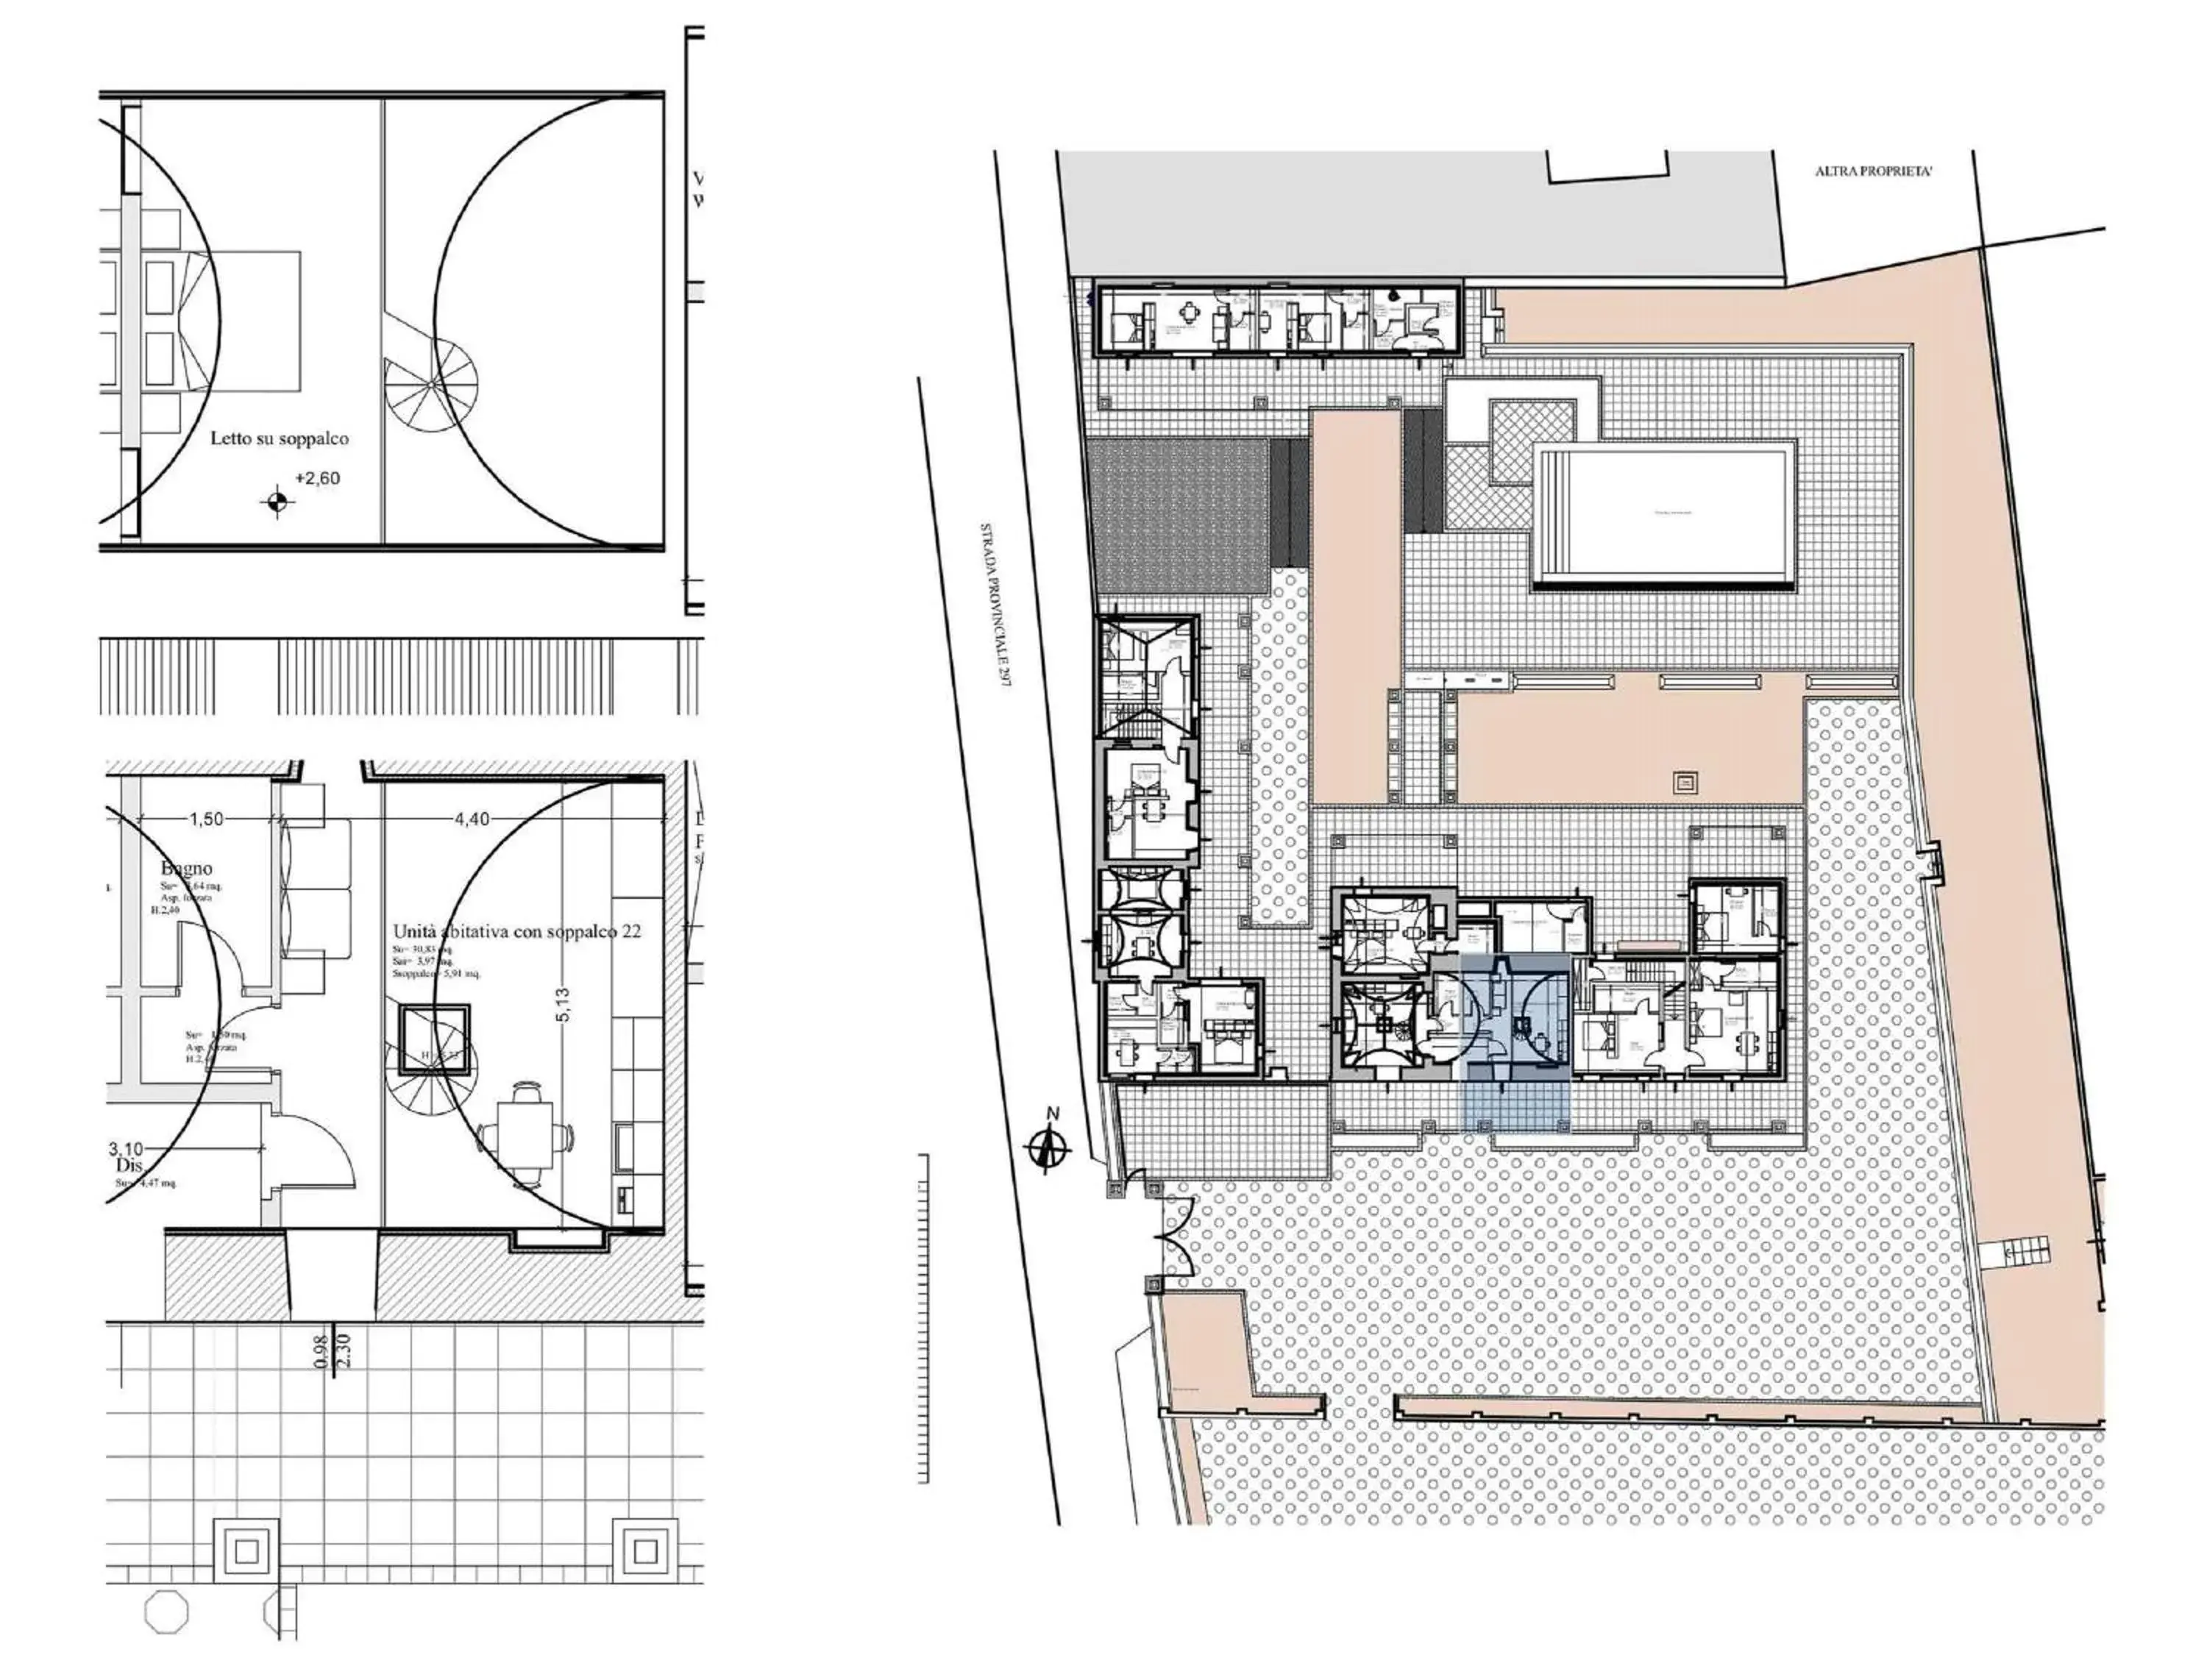 Other, Floor Plan in Borgo Sentinella